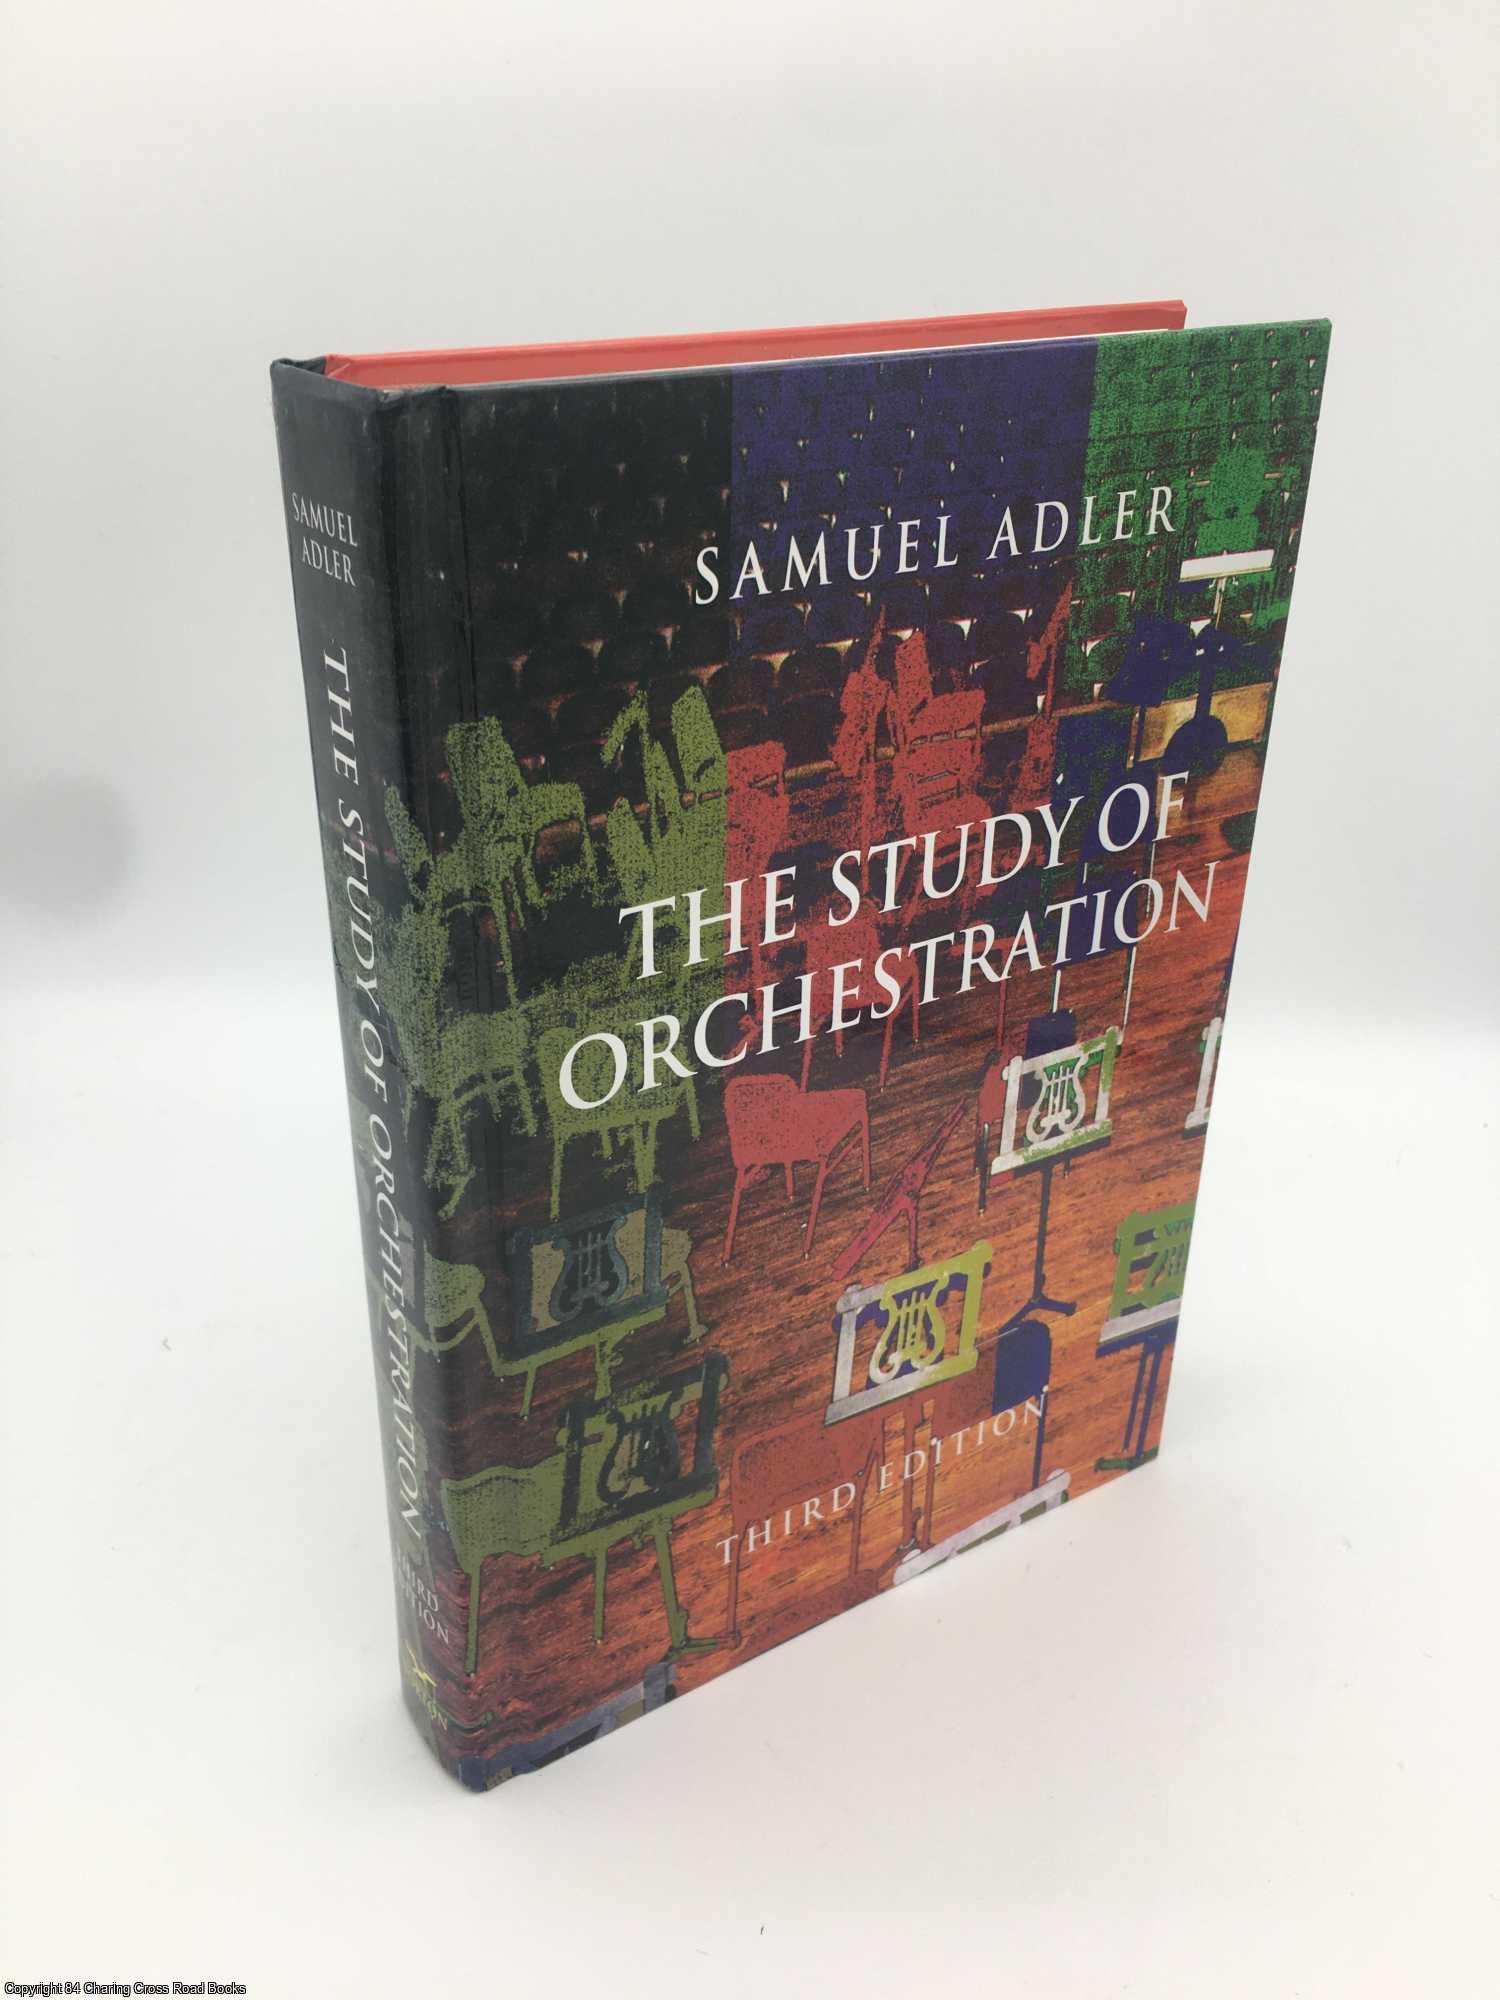 Adler, Samuel - The Study of Orchestration